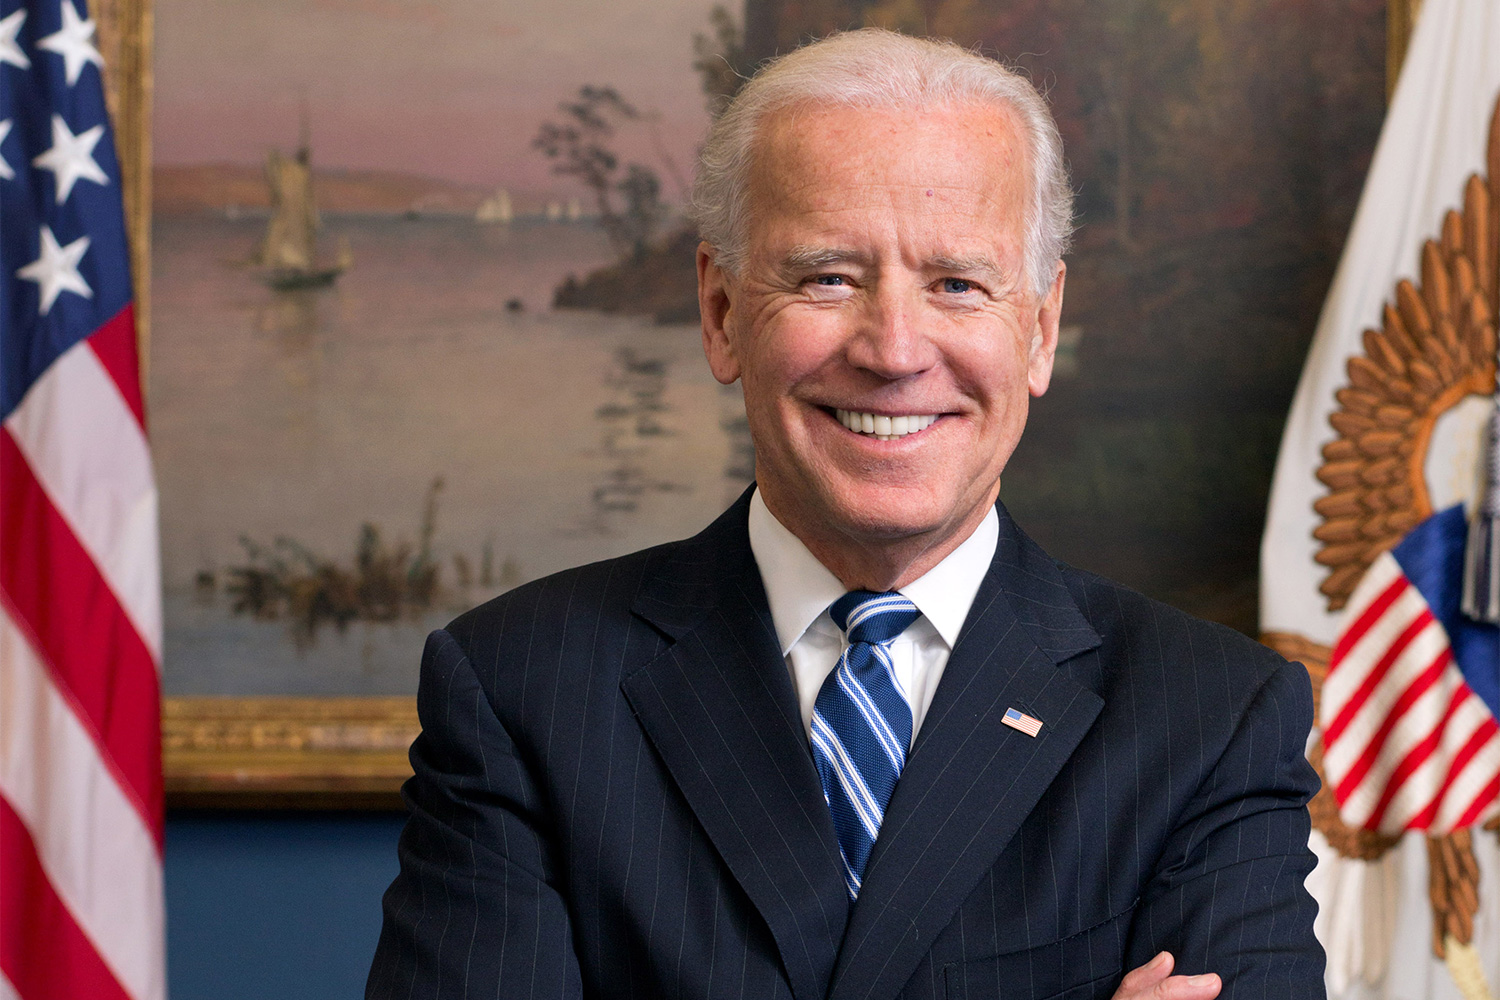 20201015endorsements-1-Joe_Biden_official_portrait_2013